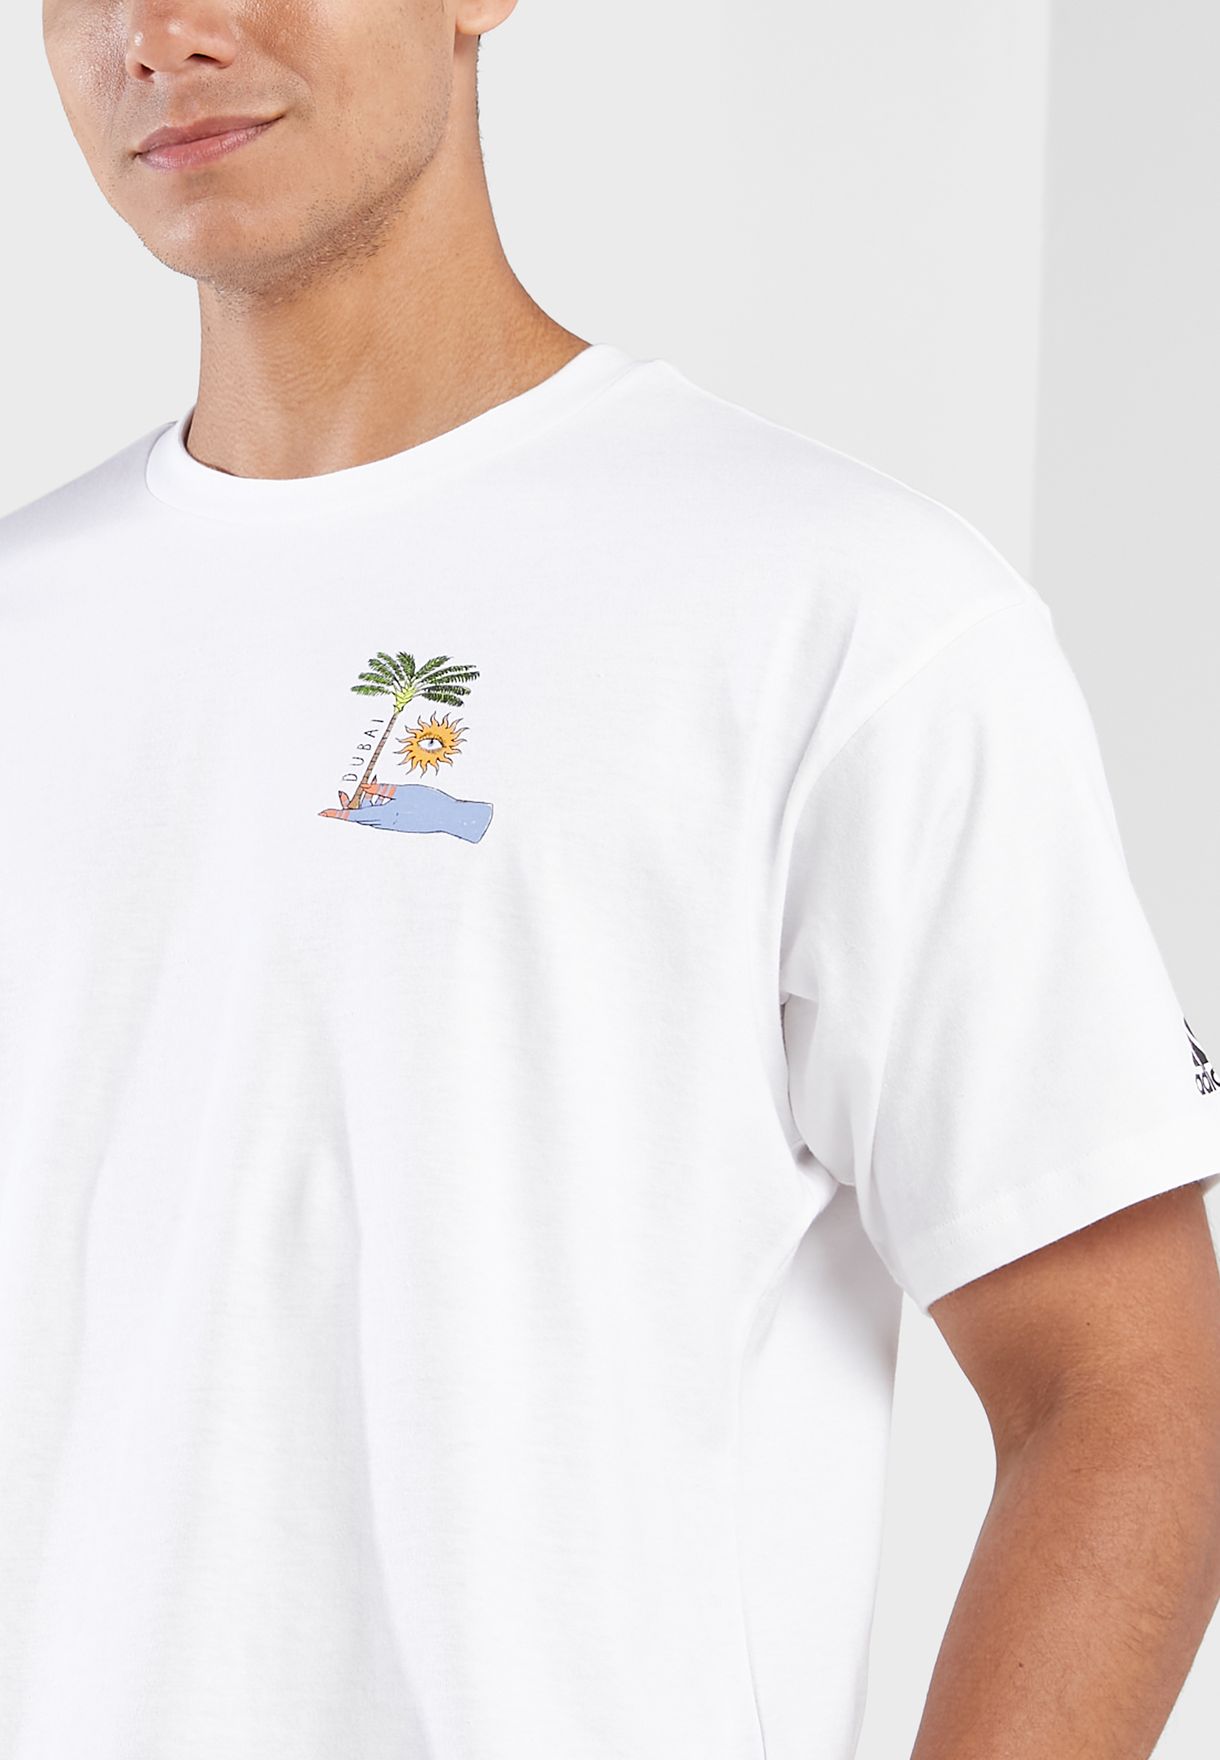 Dubai Graphic T-Shirt